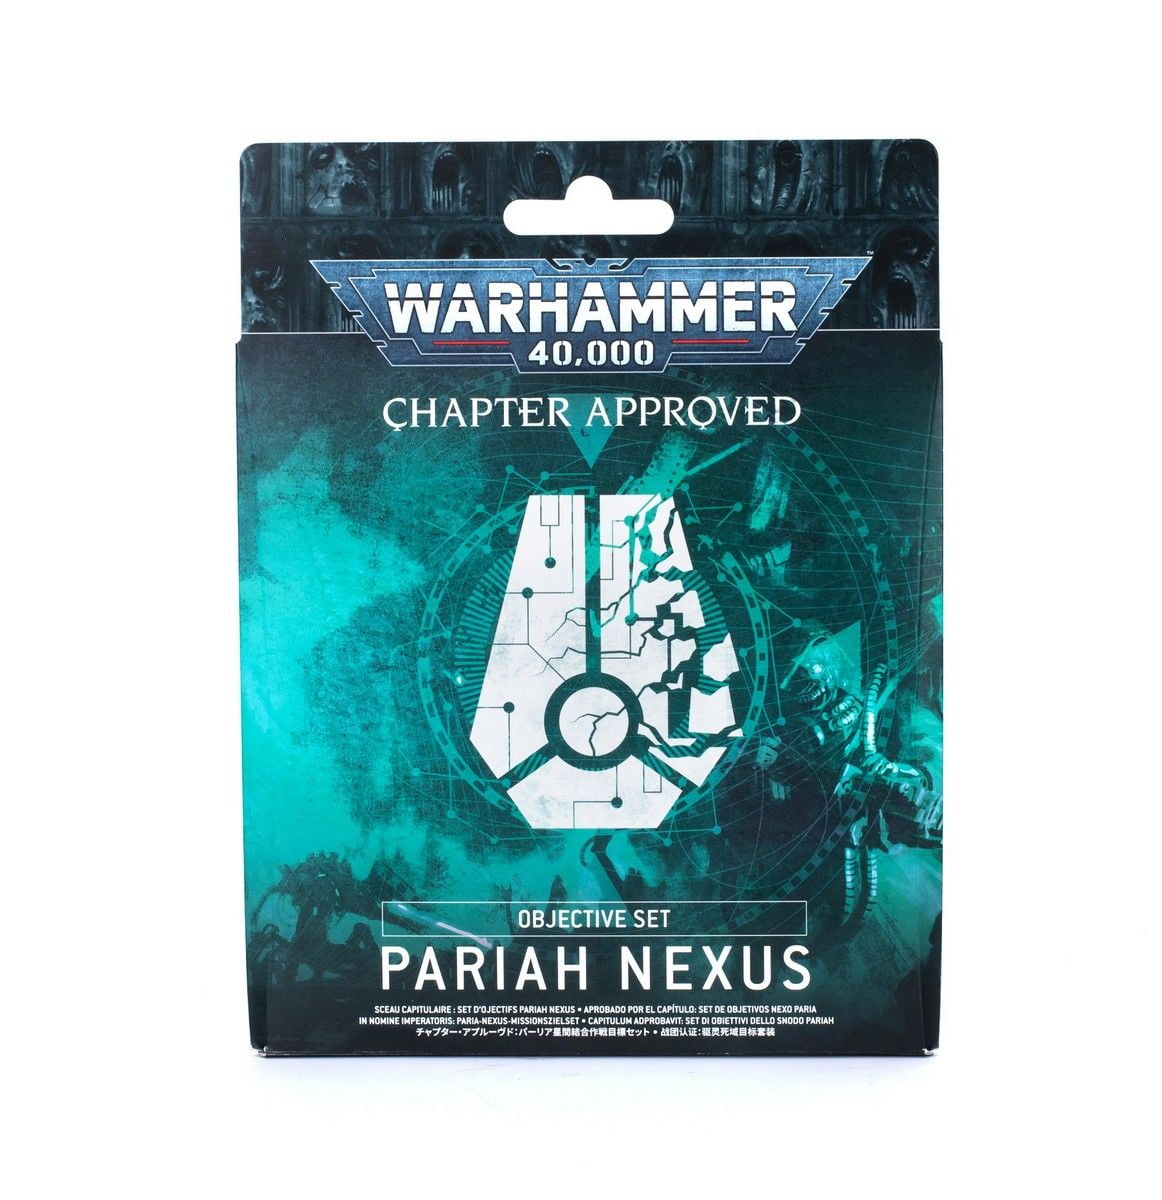 Warhammer 40,000: Objective Set: Pariah Nexus